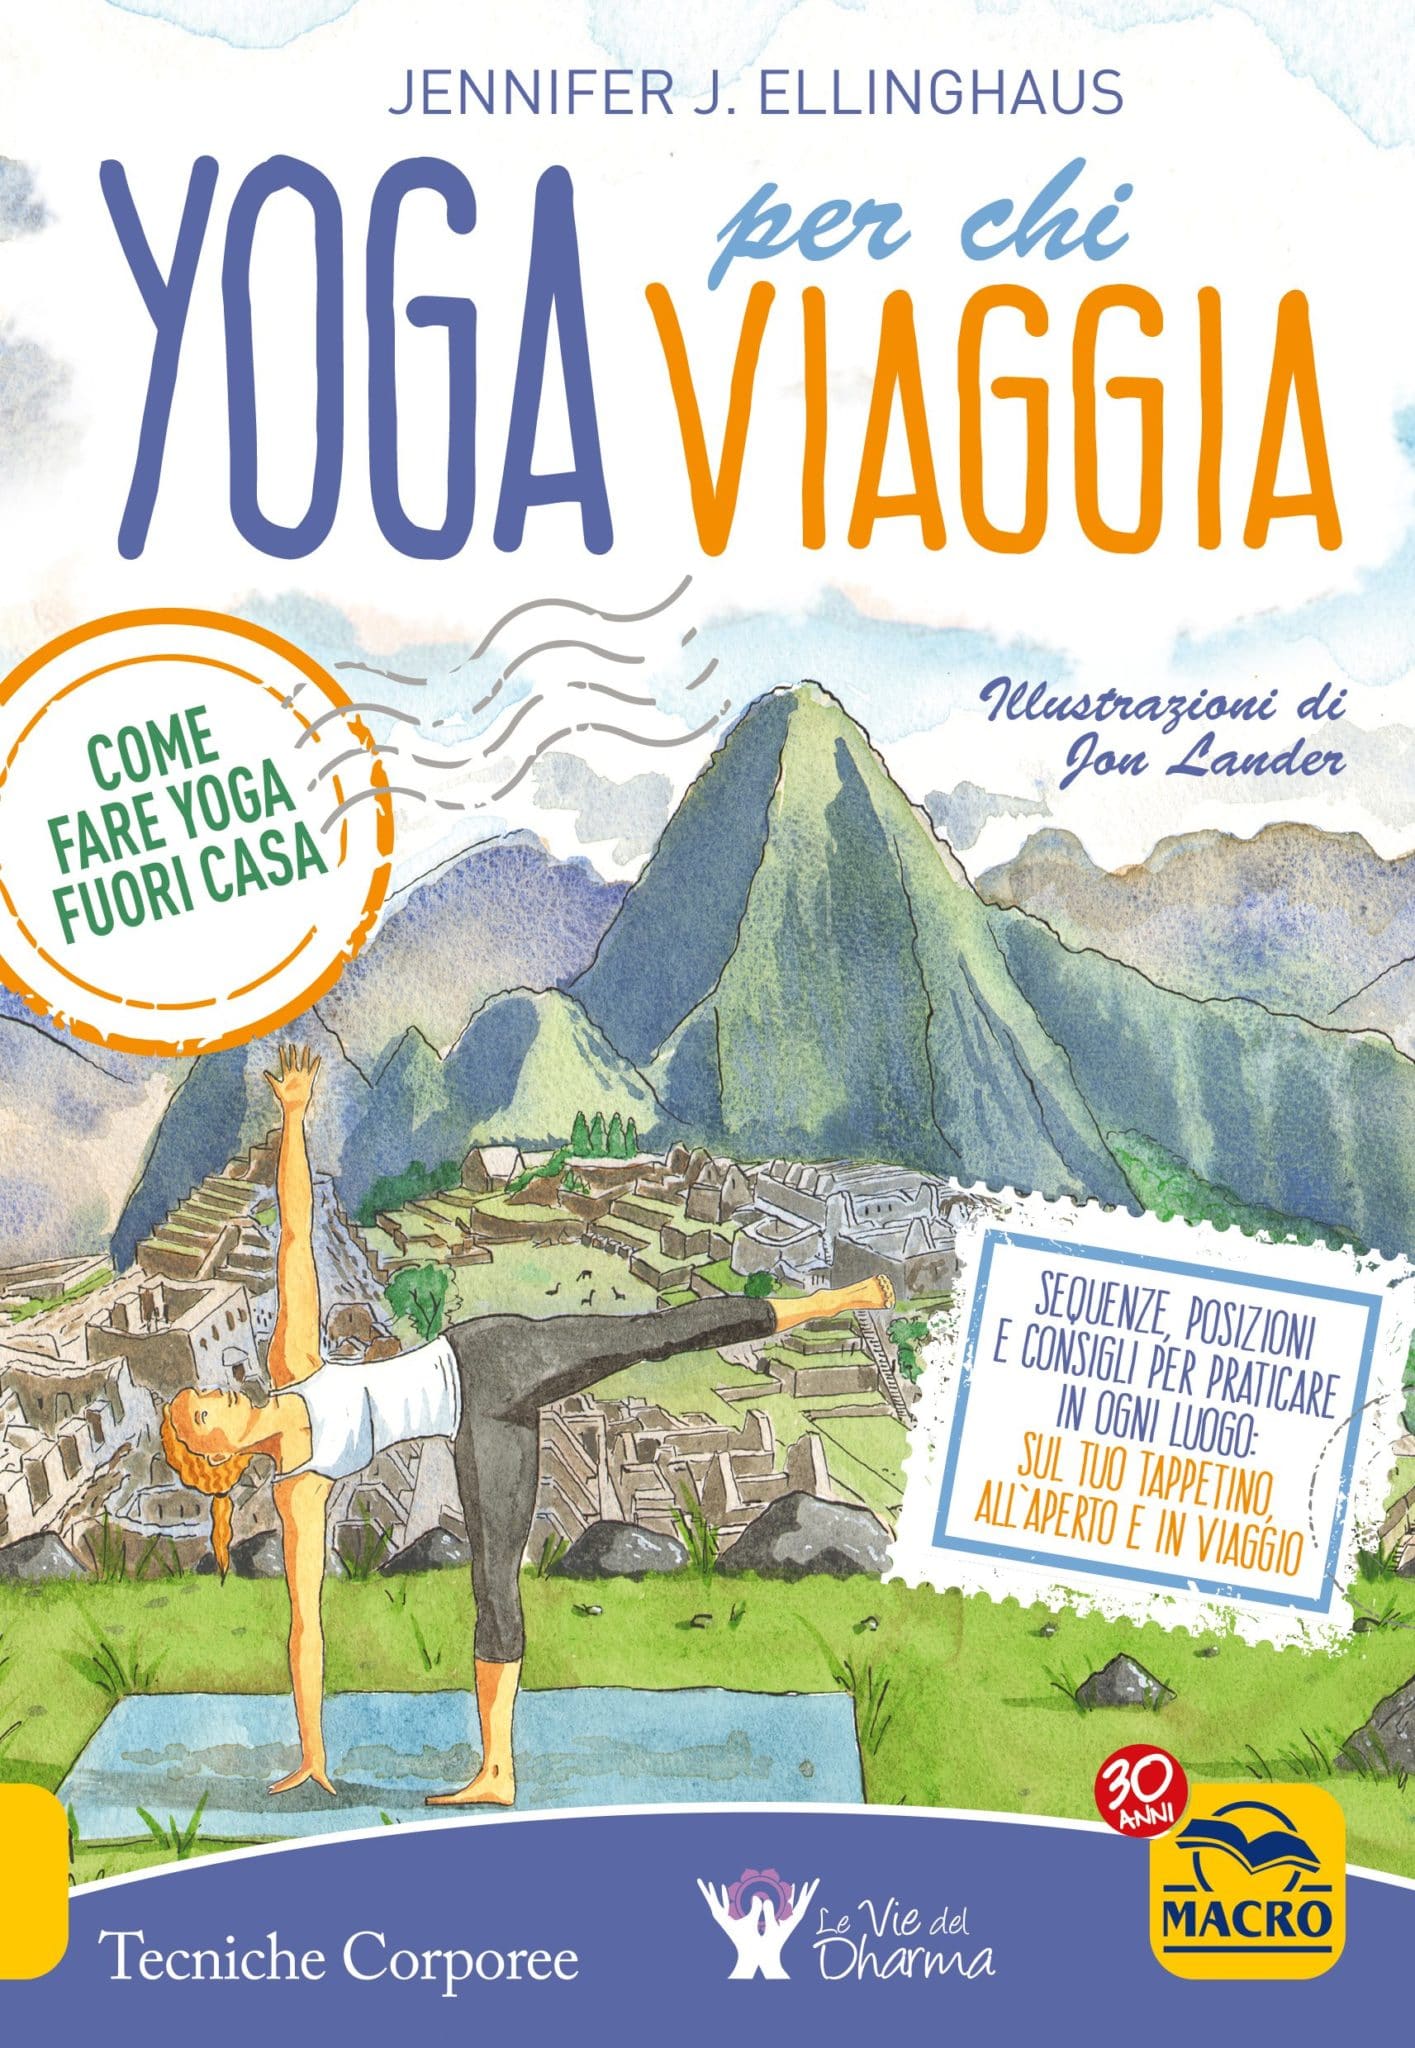 Recensione di Yoga Per Chi Viaggia – Jennifer H. Ellinghaus